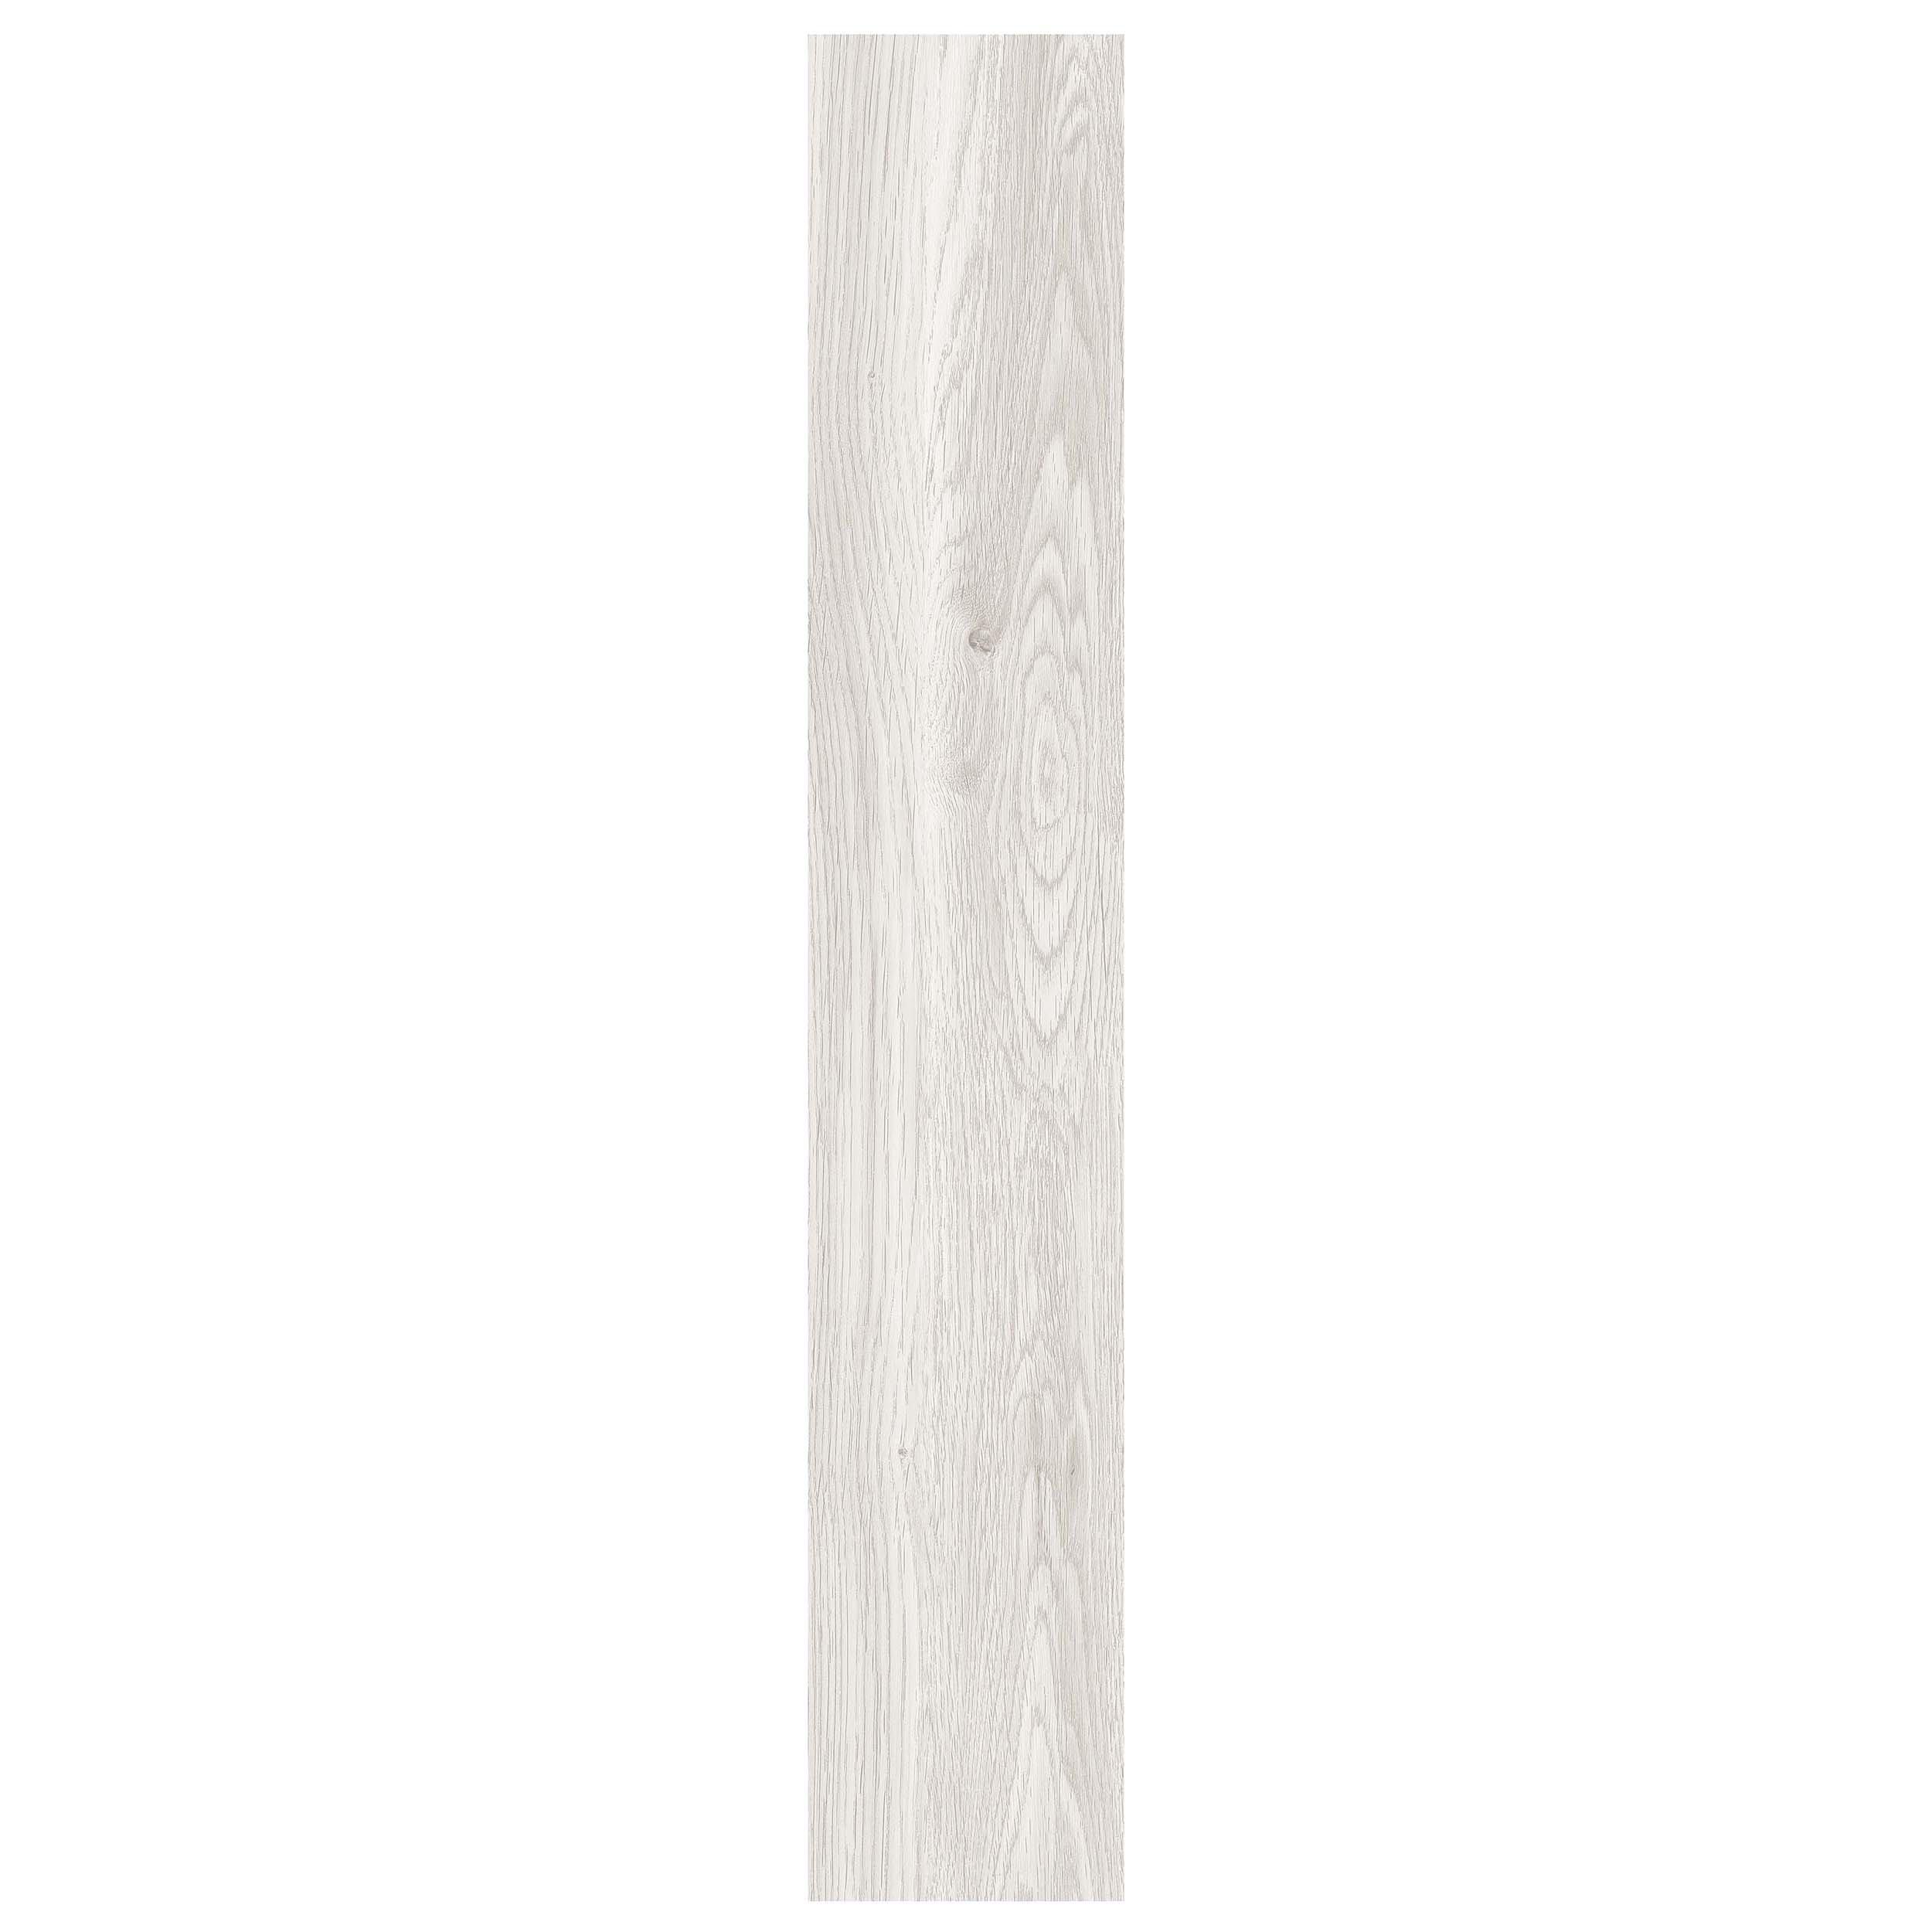 Montana White Wood Plank Porcelain Tile